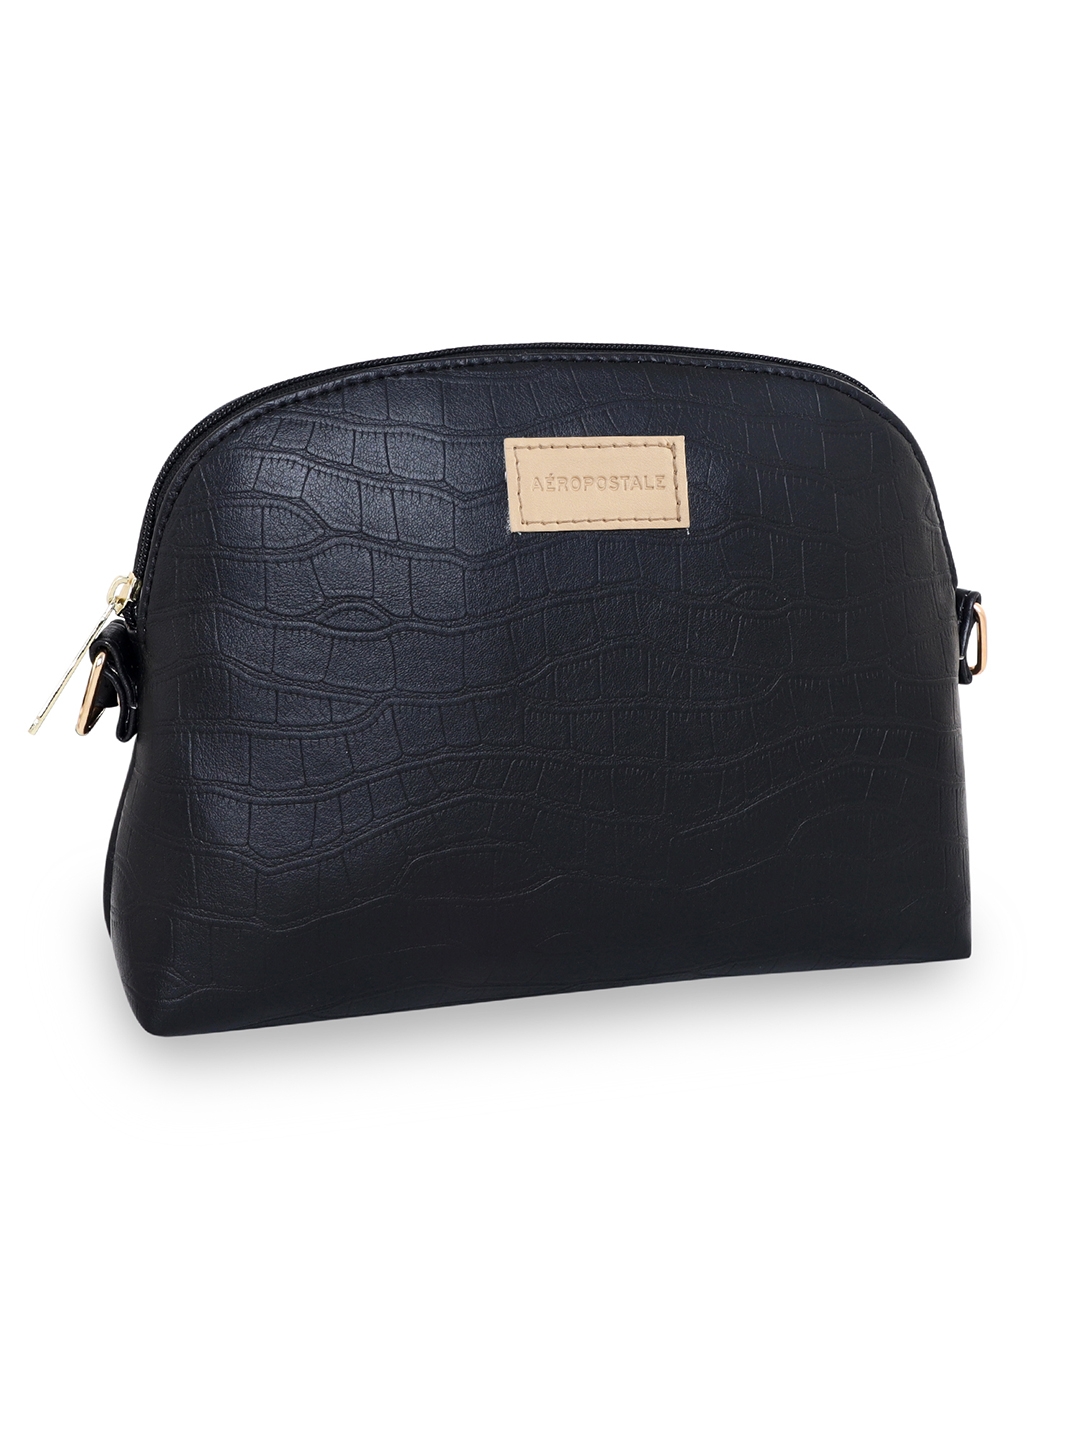 Aeropostale | Aeropostale Textured Kylie PU Sling Bag with non-detachable strap (Black) 1